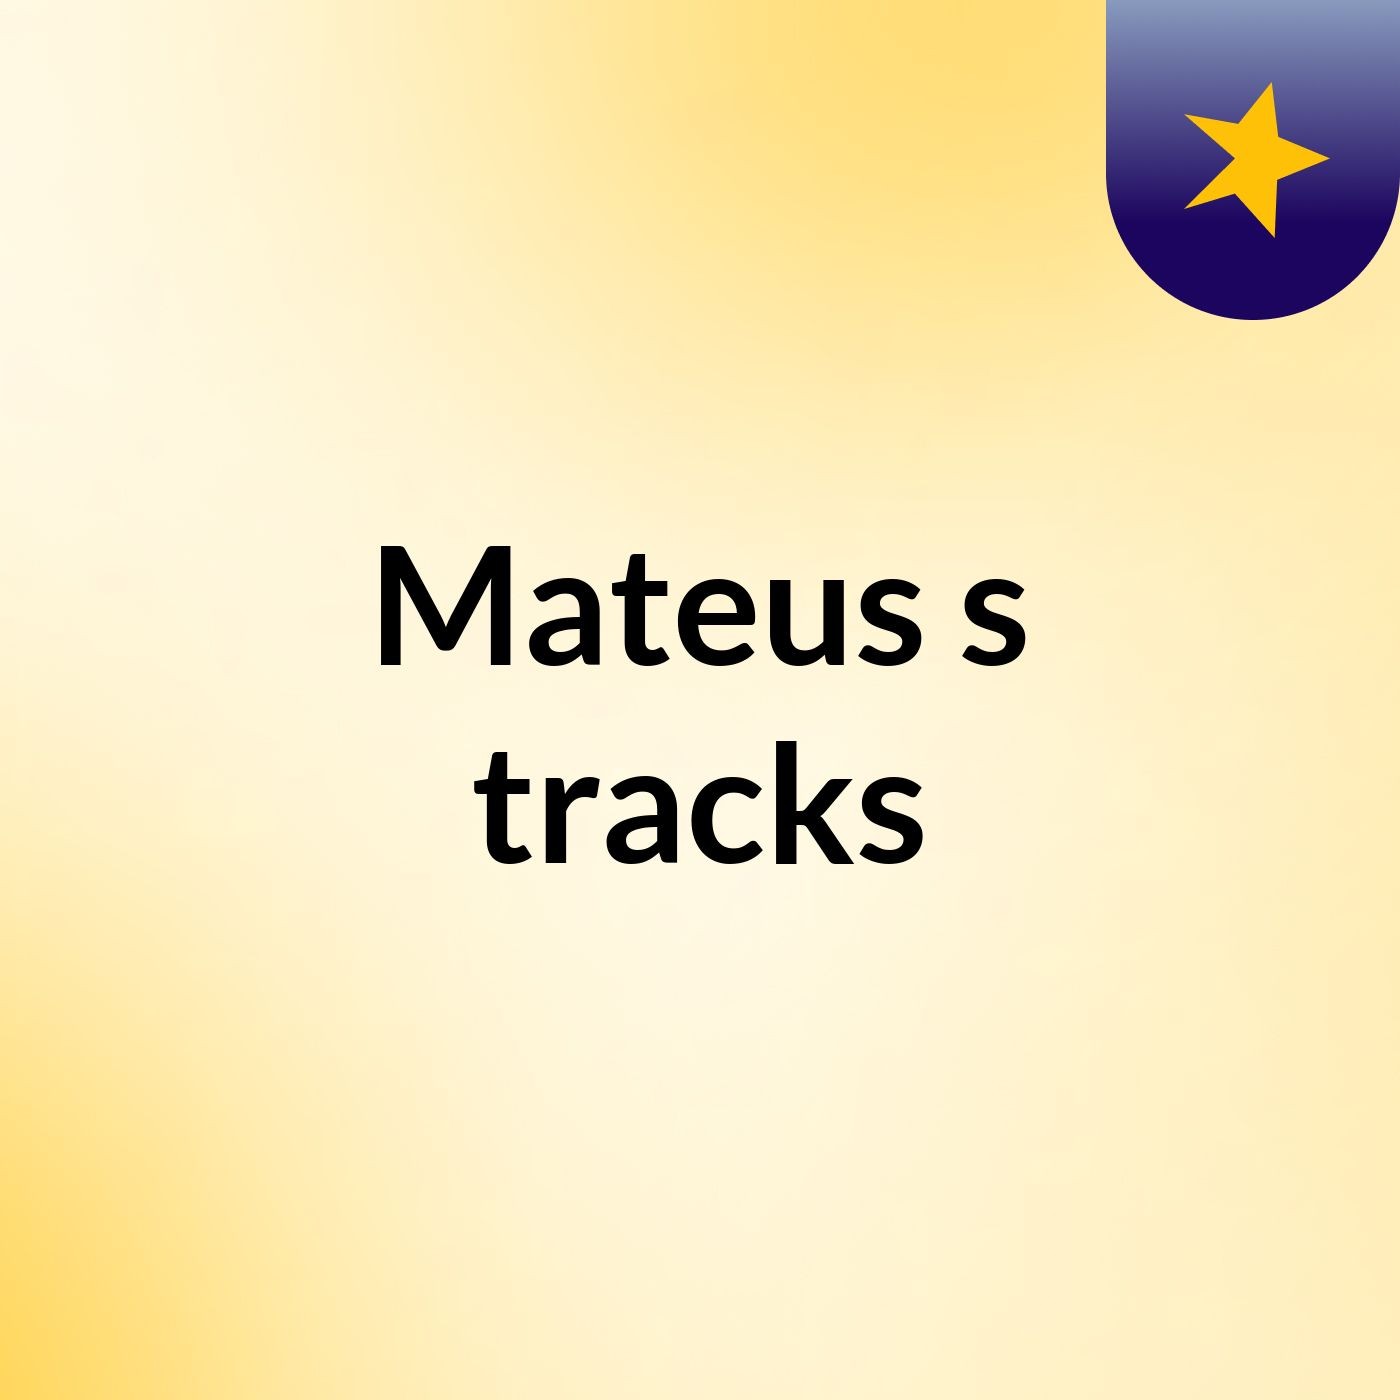 Mateus's tracks